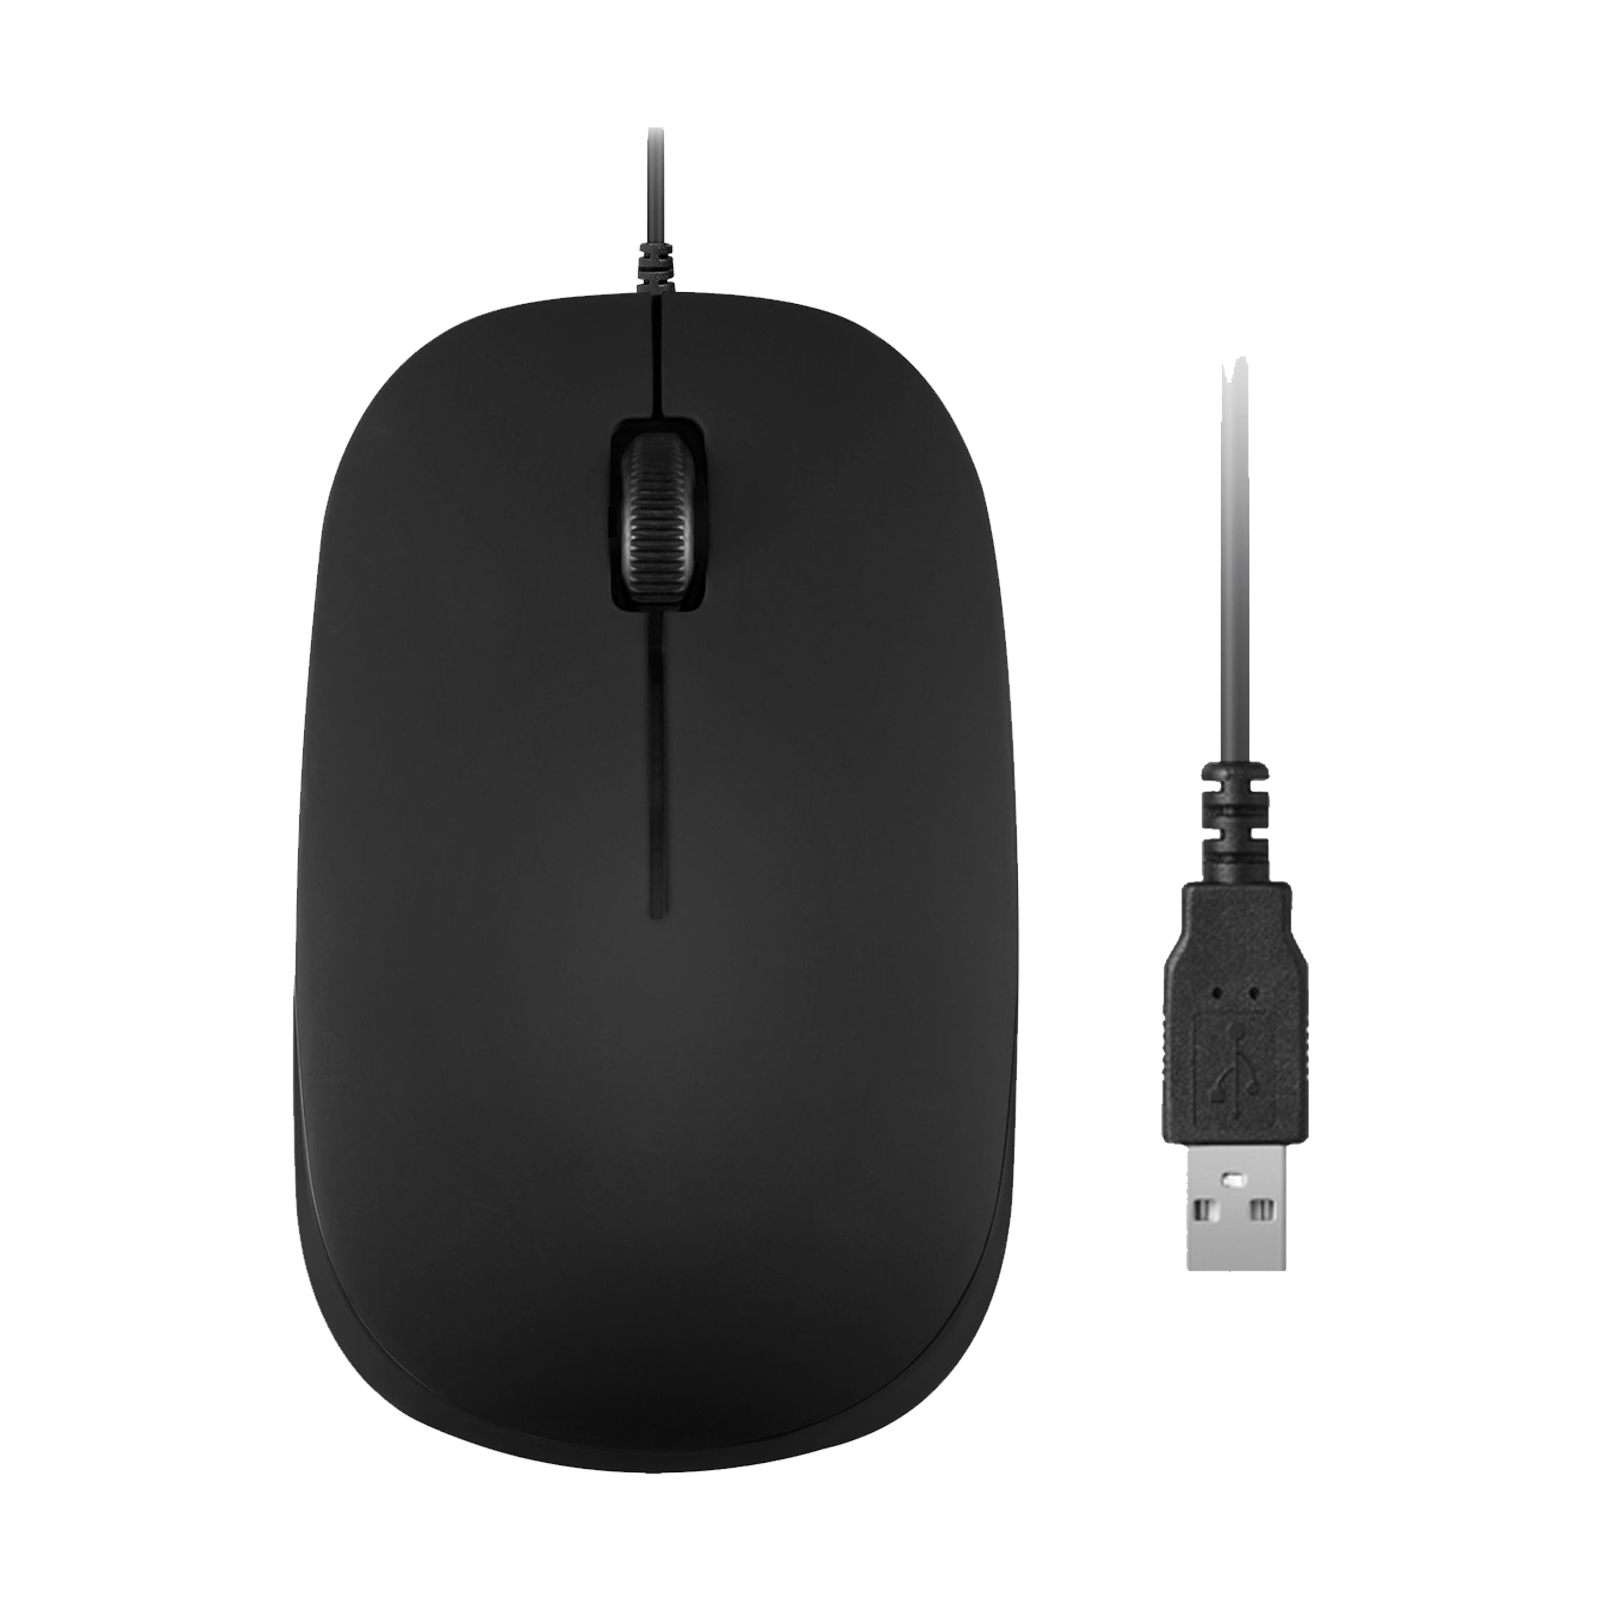 PERIMICE-201 U - Wired USB Mouse - Perixx Europe